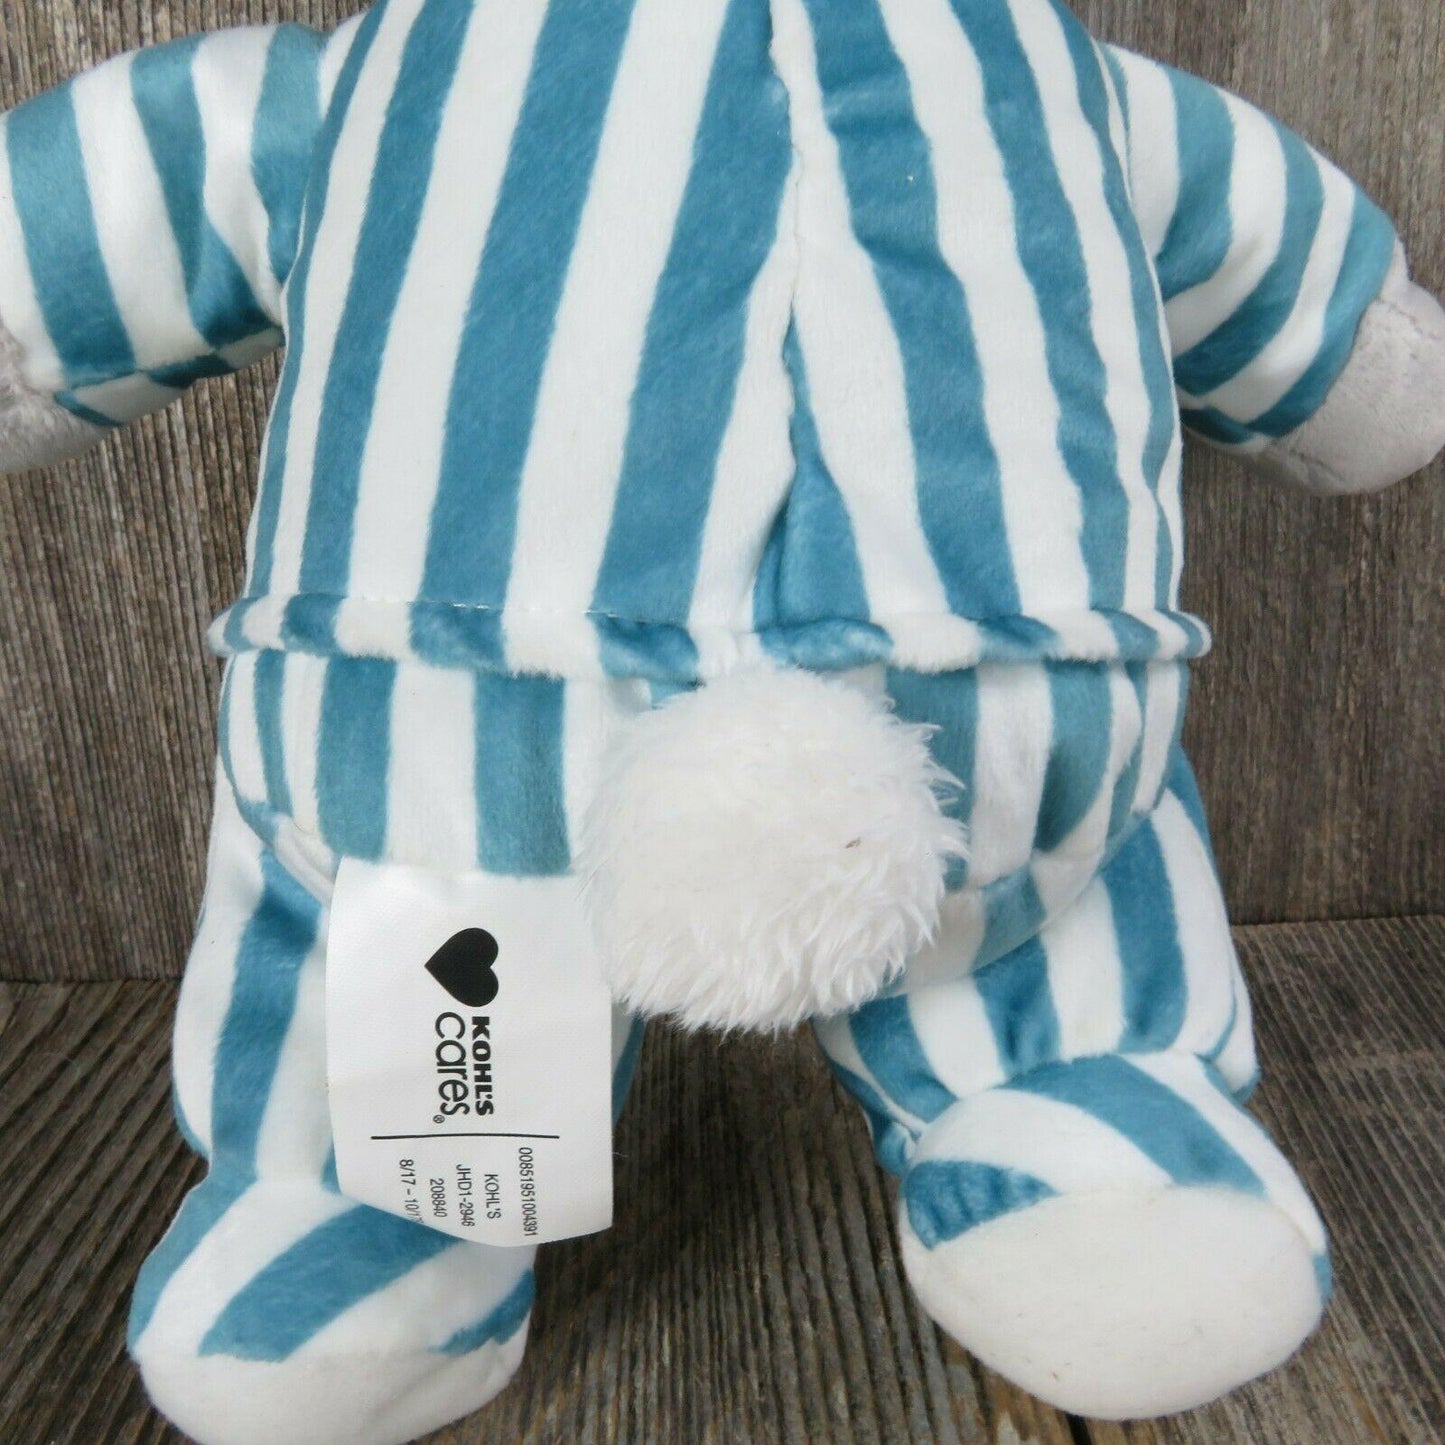 Goodnight Moon Bunny Rabbit Gray Striped Pajamas Plush Stuffed Kohls Cares